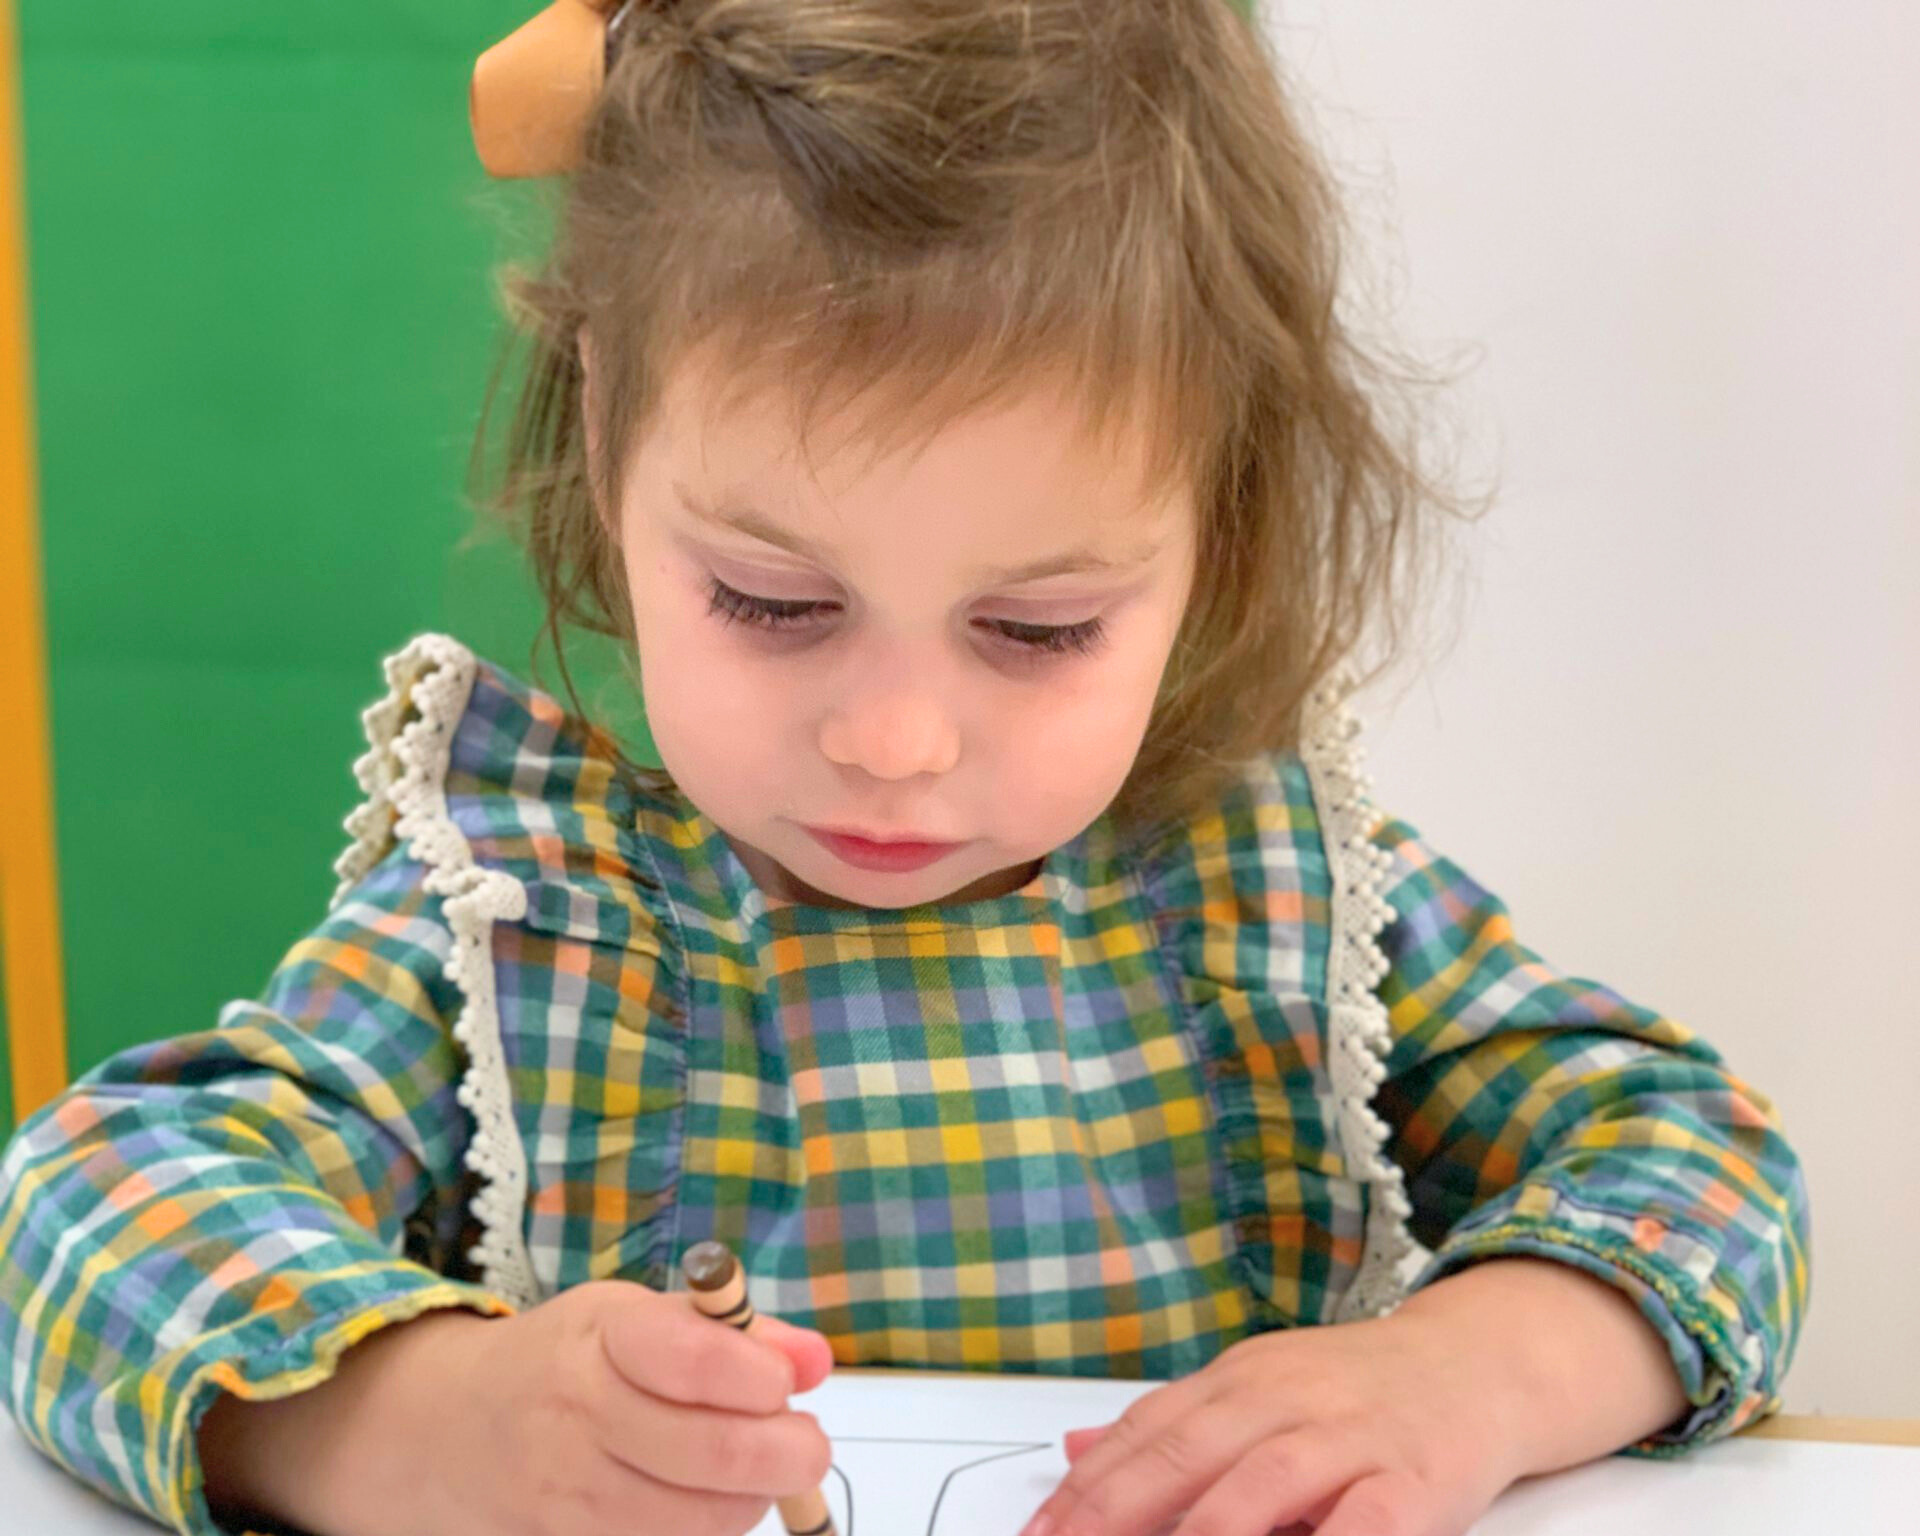 Preschool Art Programs Teach More Than Just Drawing - Playgarden NYC